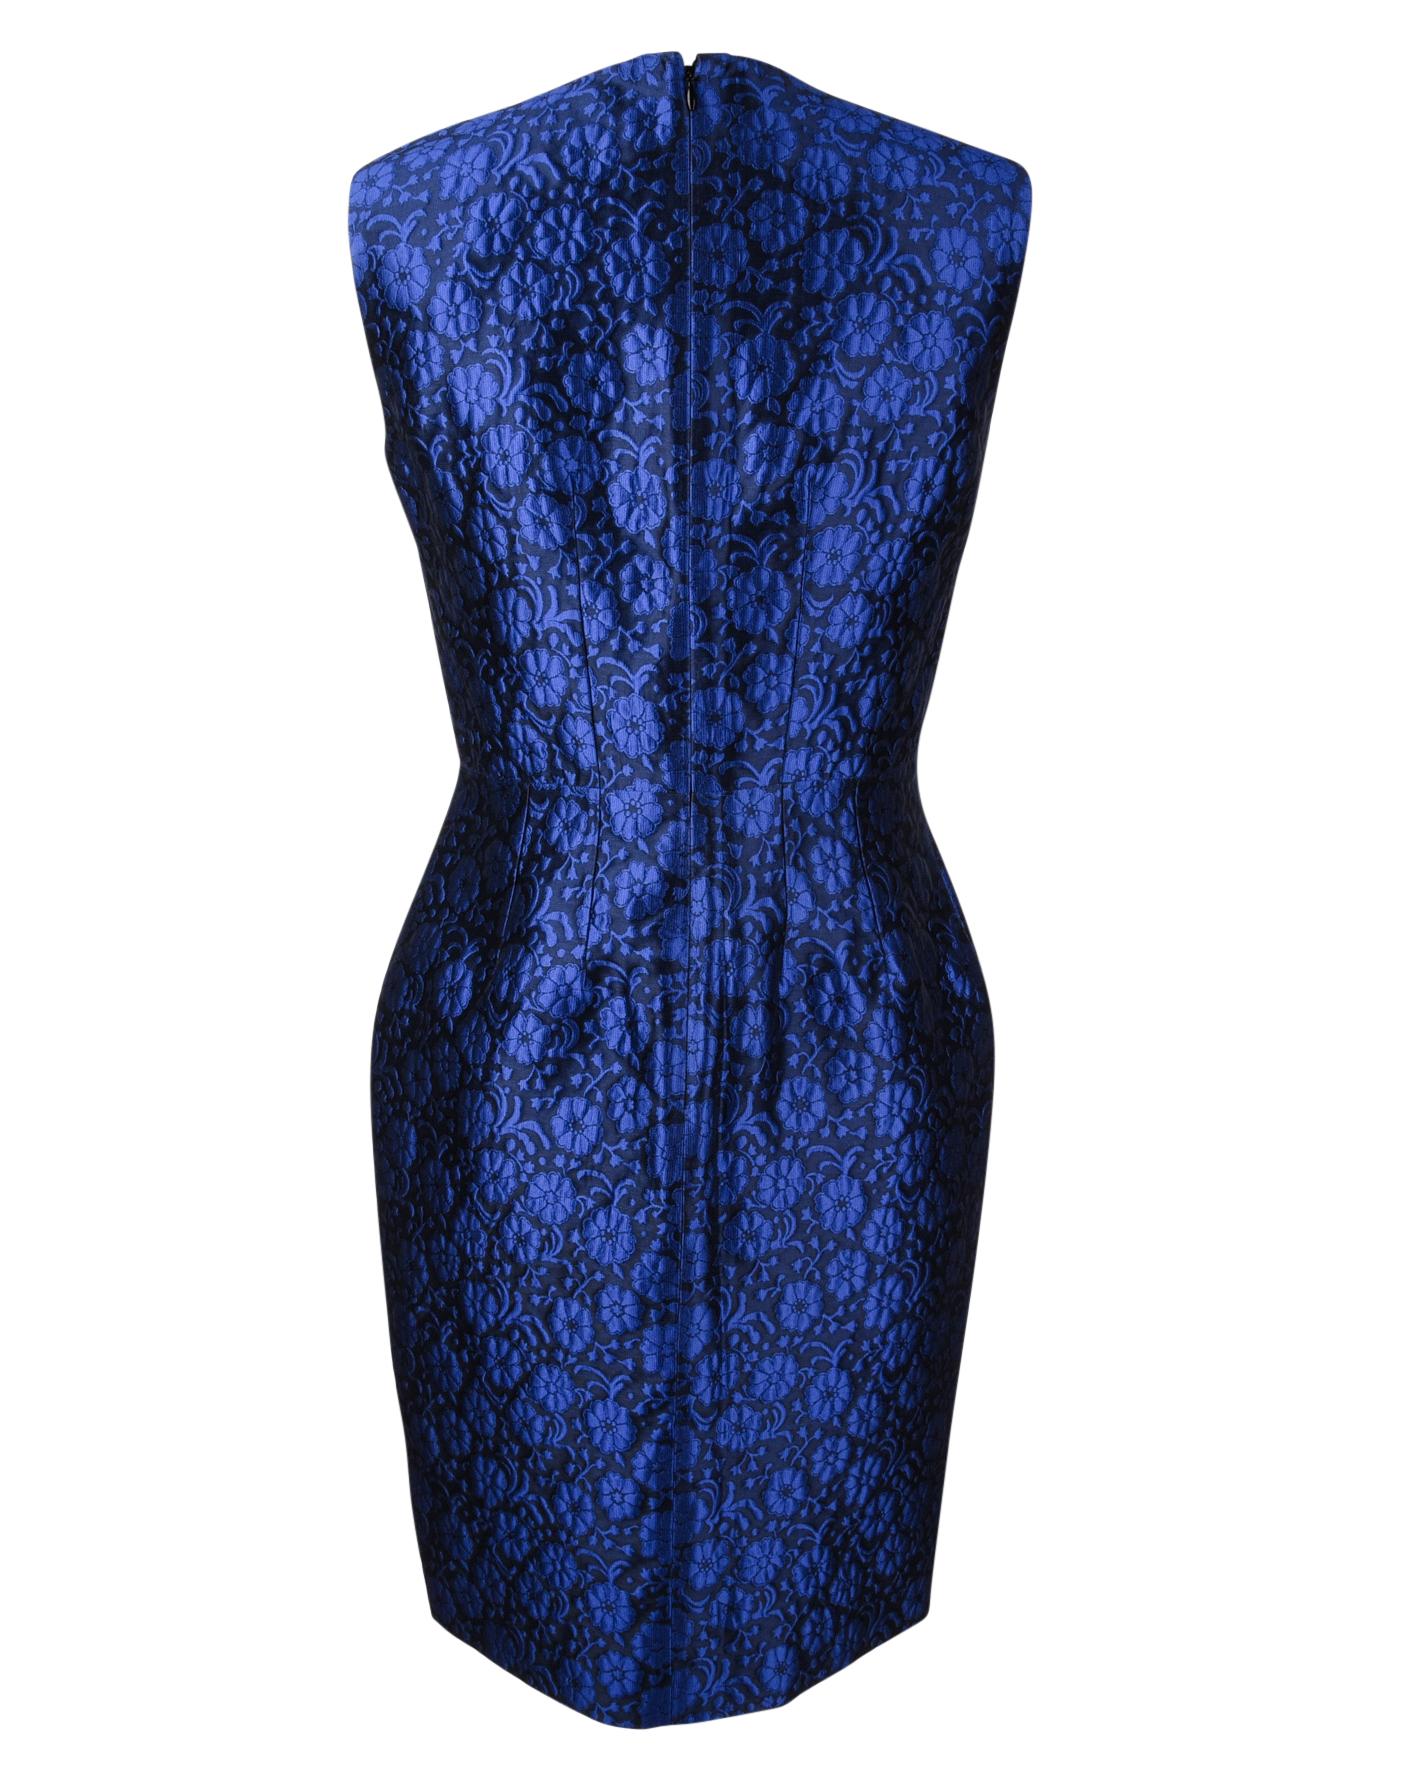 Christian Dior Dress Blue Floral Print w/ Long Sleeveless Vest 8 1